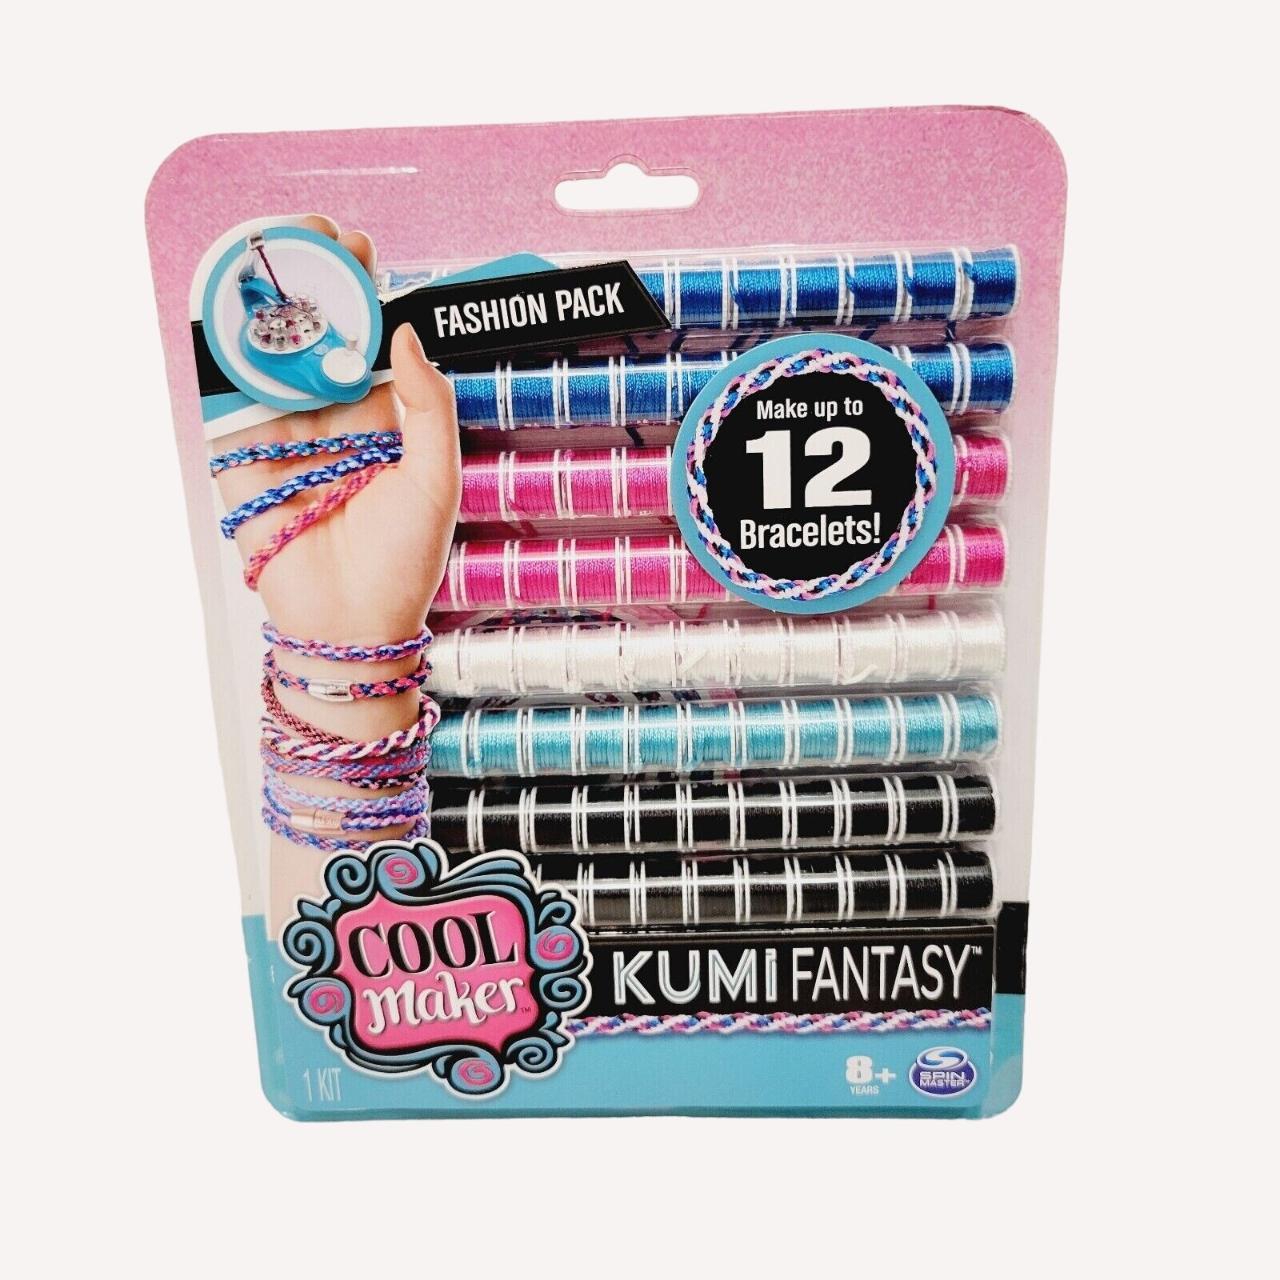 Cool Maker Fashion Pack Kumi Fantasy Refill Set 